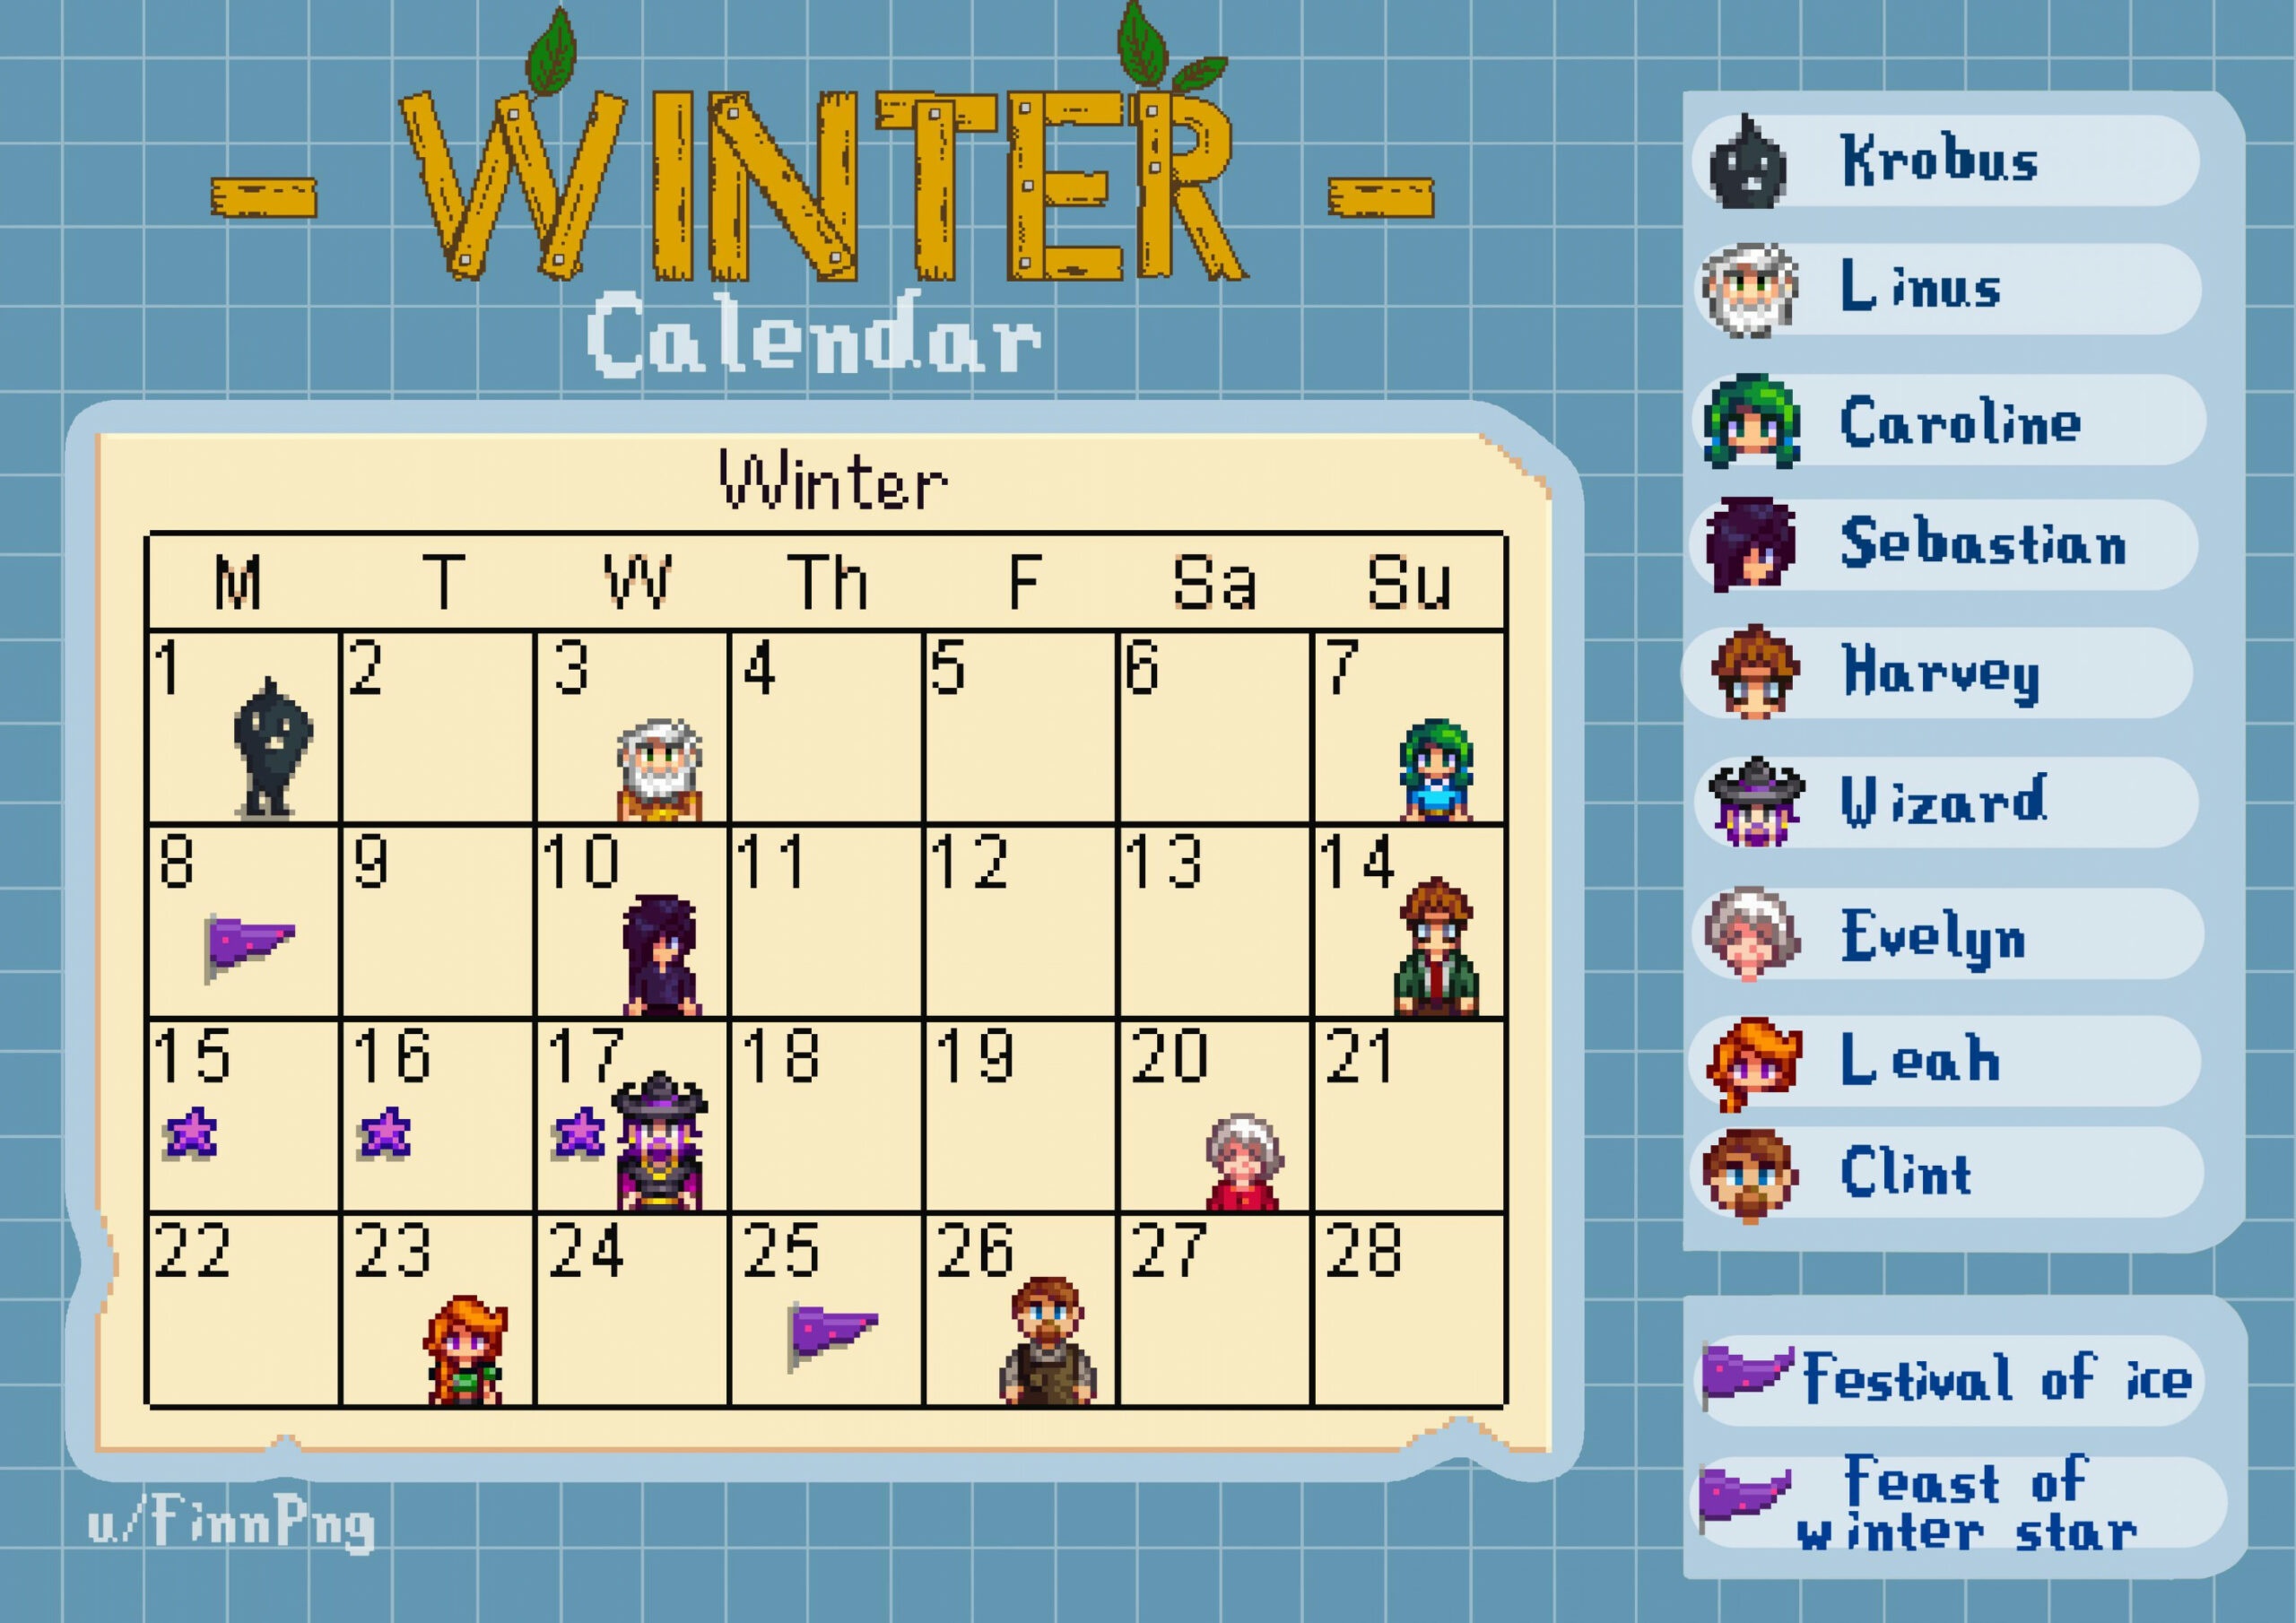 Seasonal calendars! Birthdays and events